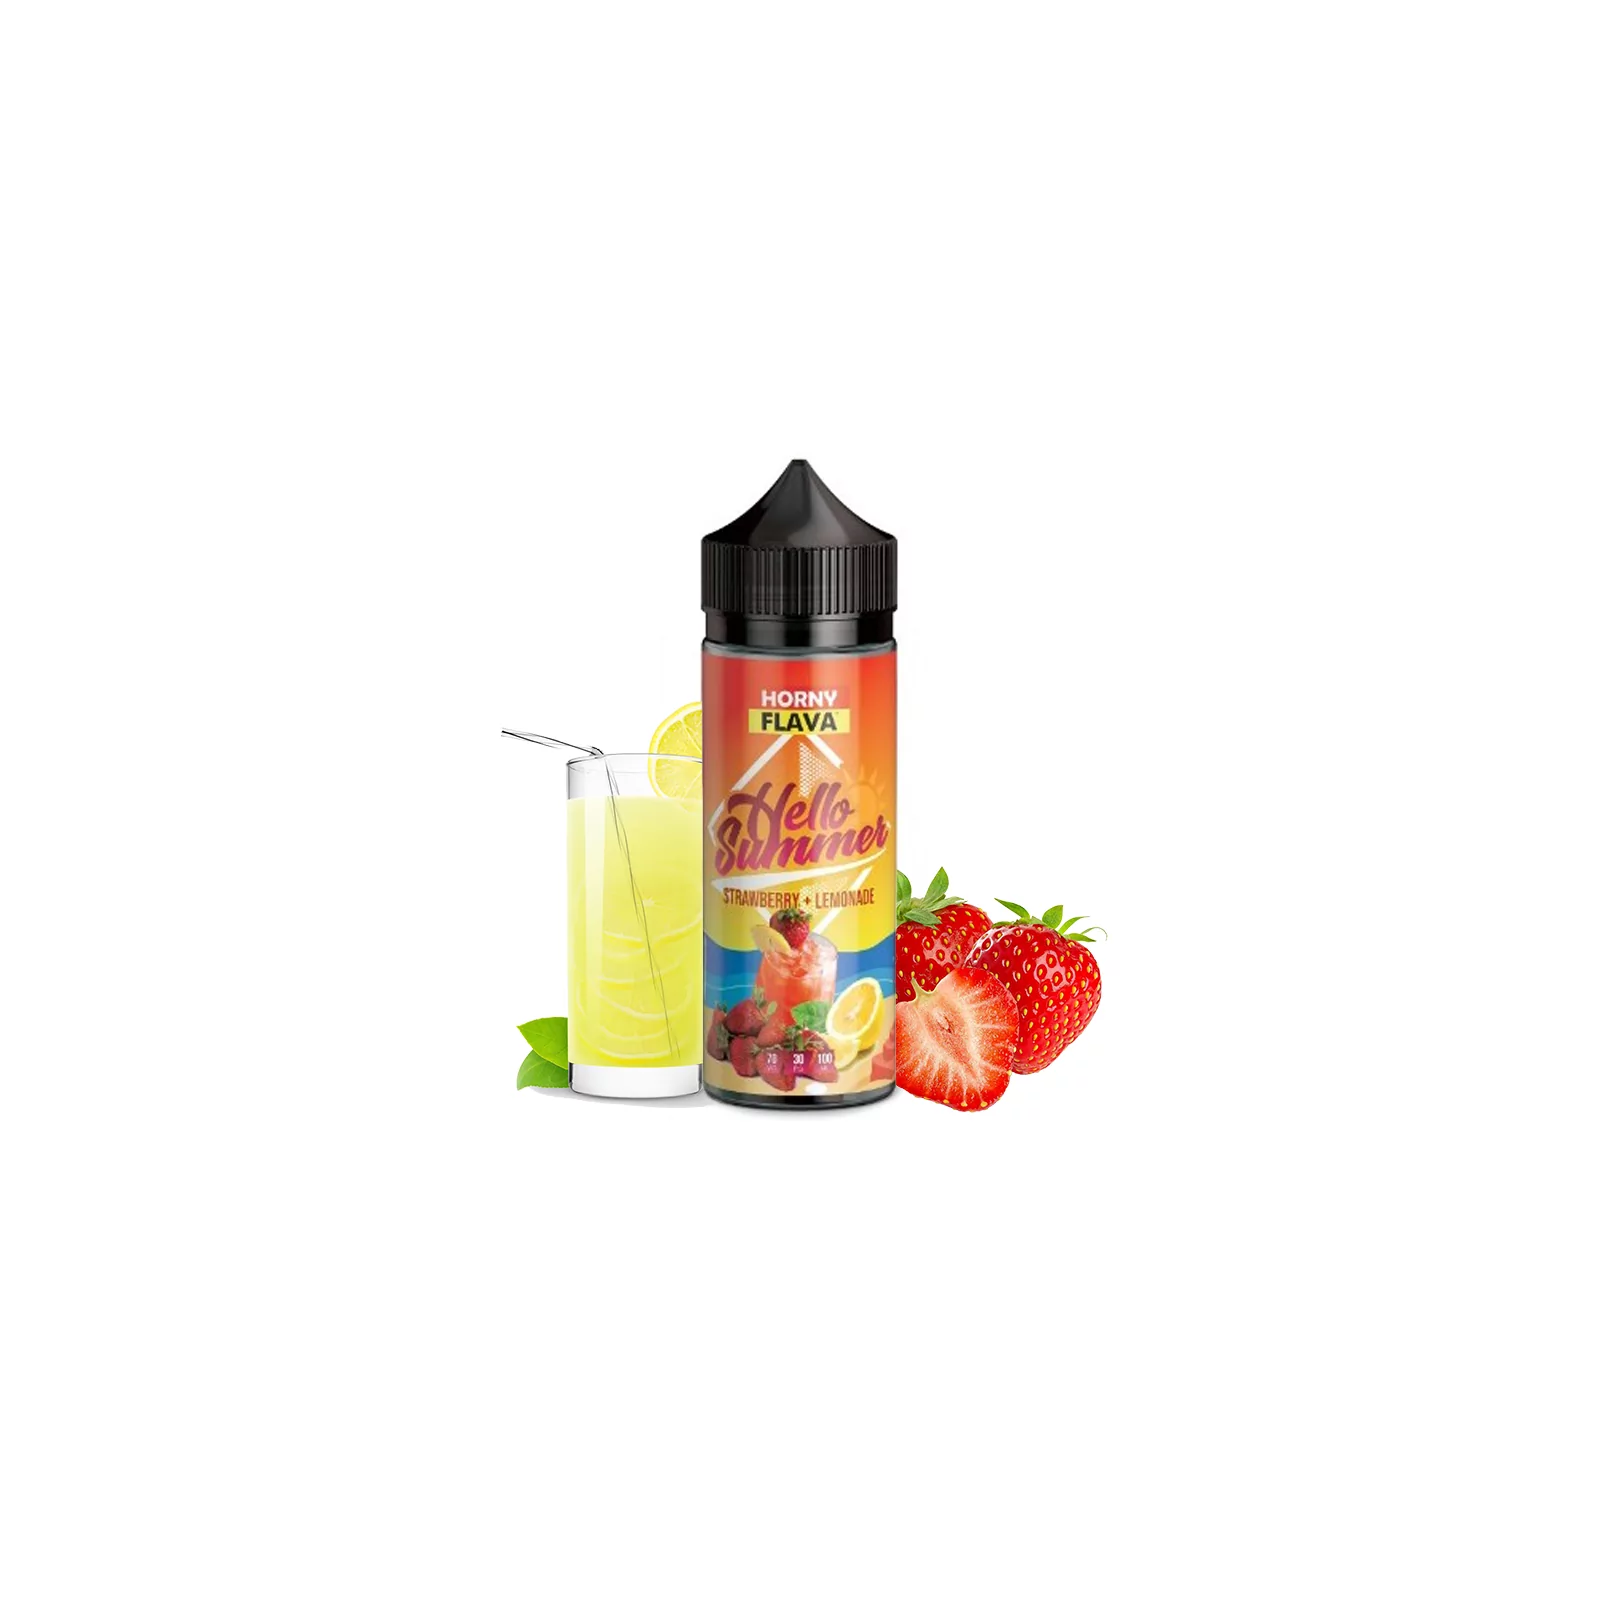 Strawberry Lemonade 100ml - Horny Flava